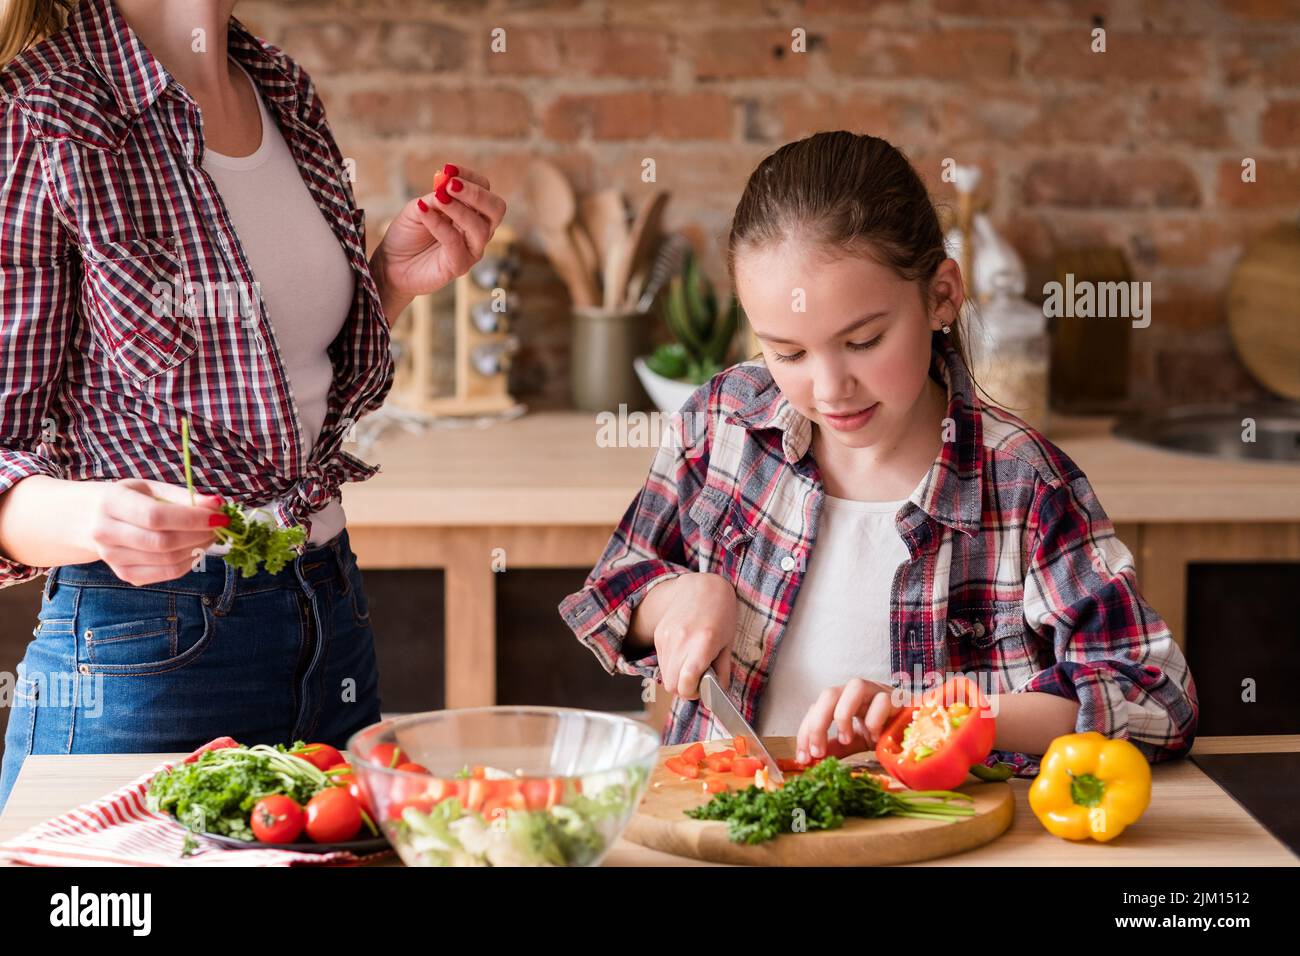 fille coupe vegie cuisiner ingrédients du dîner aliments sains Banque D'Images